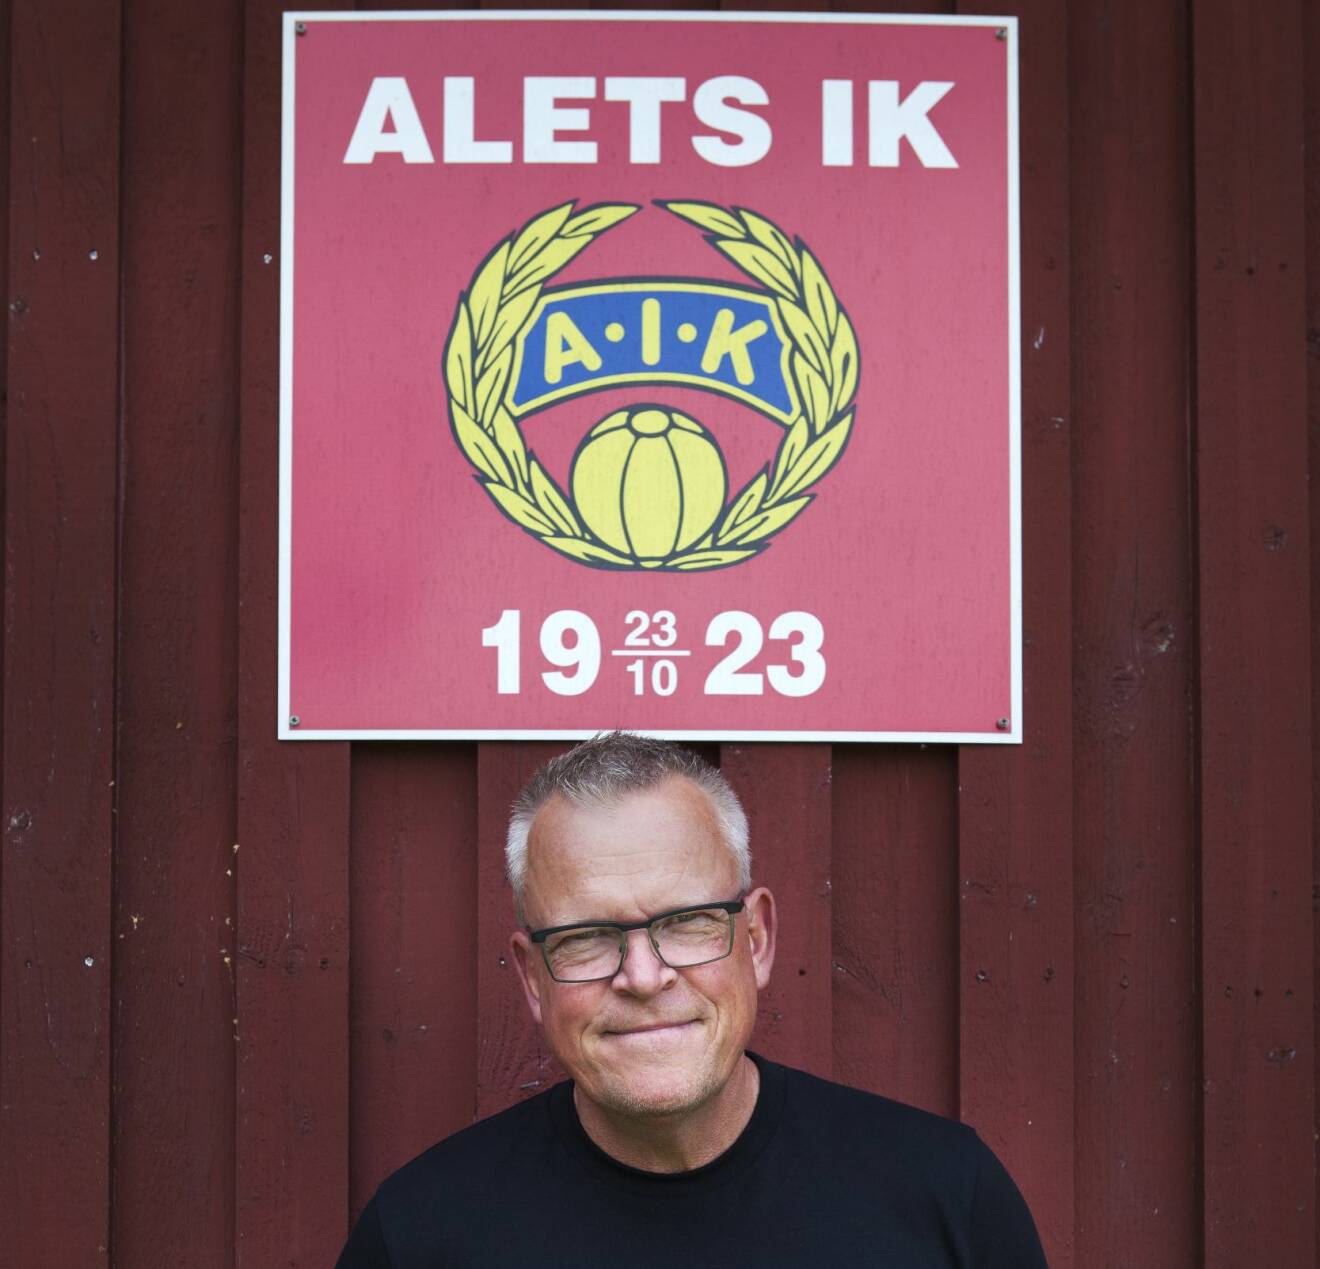 Janne porträtt under röd Alet-skylt.